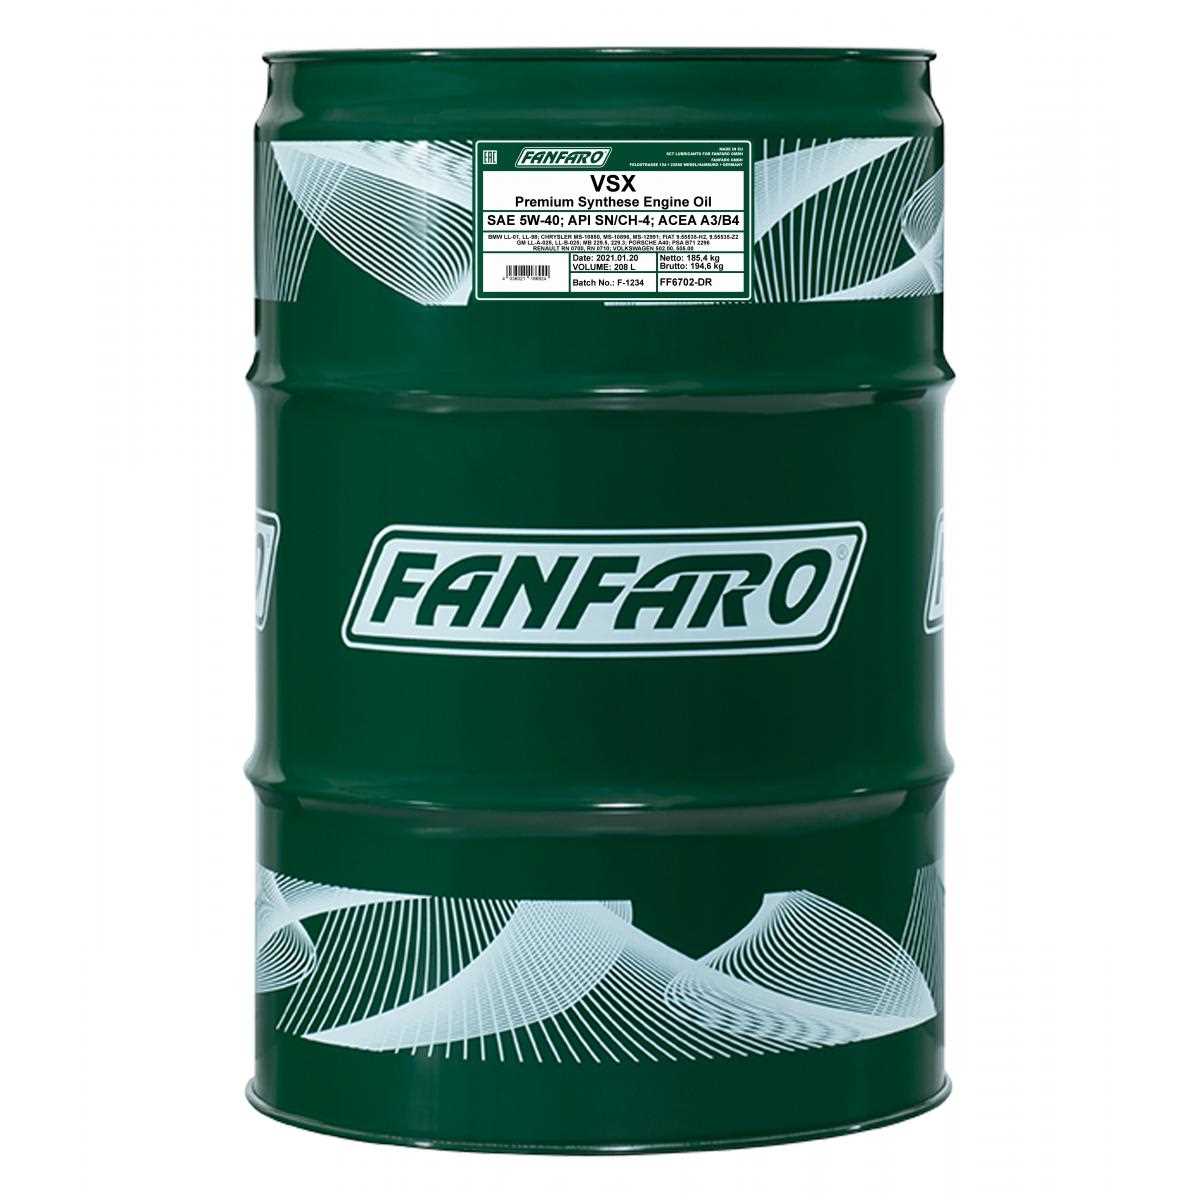 208 Liter FANFARO VSX 5W-40 API SN/CH-4 Motoröl Engine Oil Öl